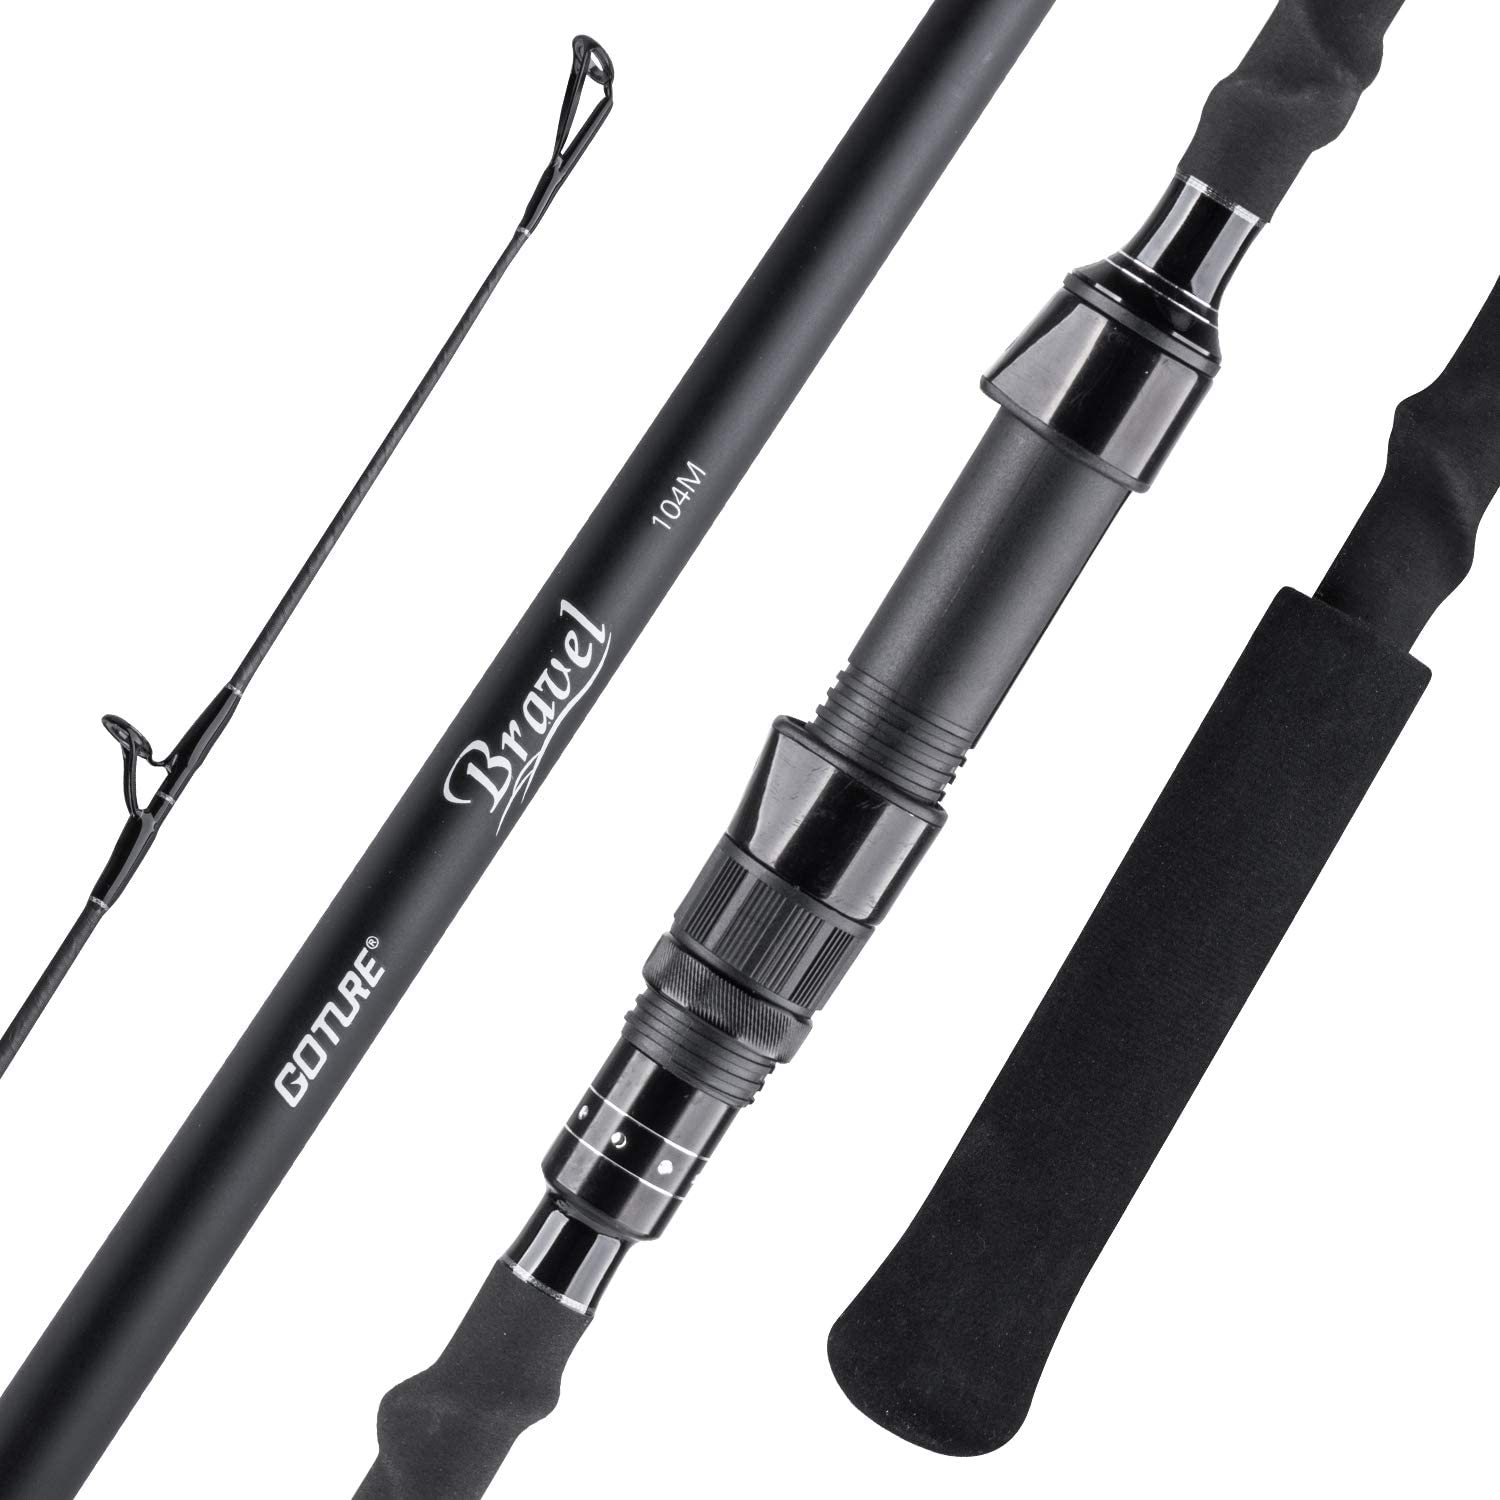 Goture 4Pcs Casting Fishing Rods - Carbon Fiber Casting Rods